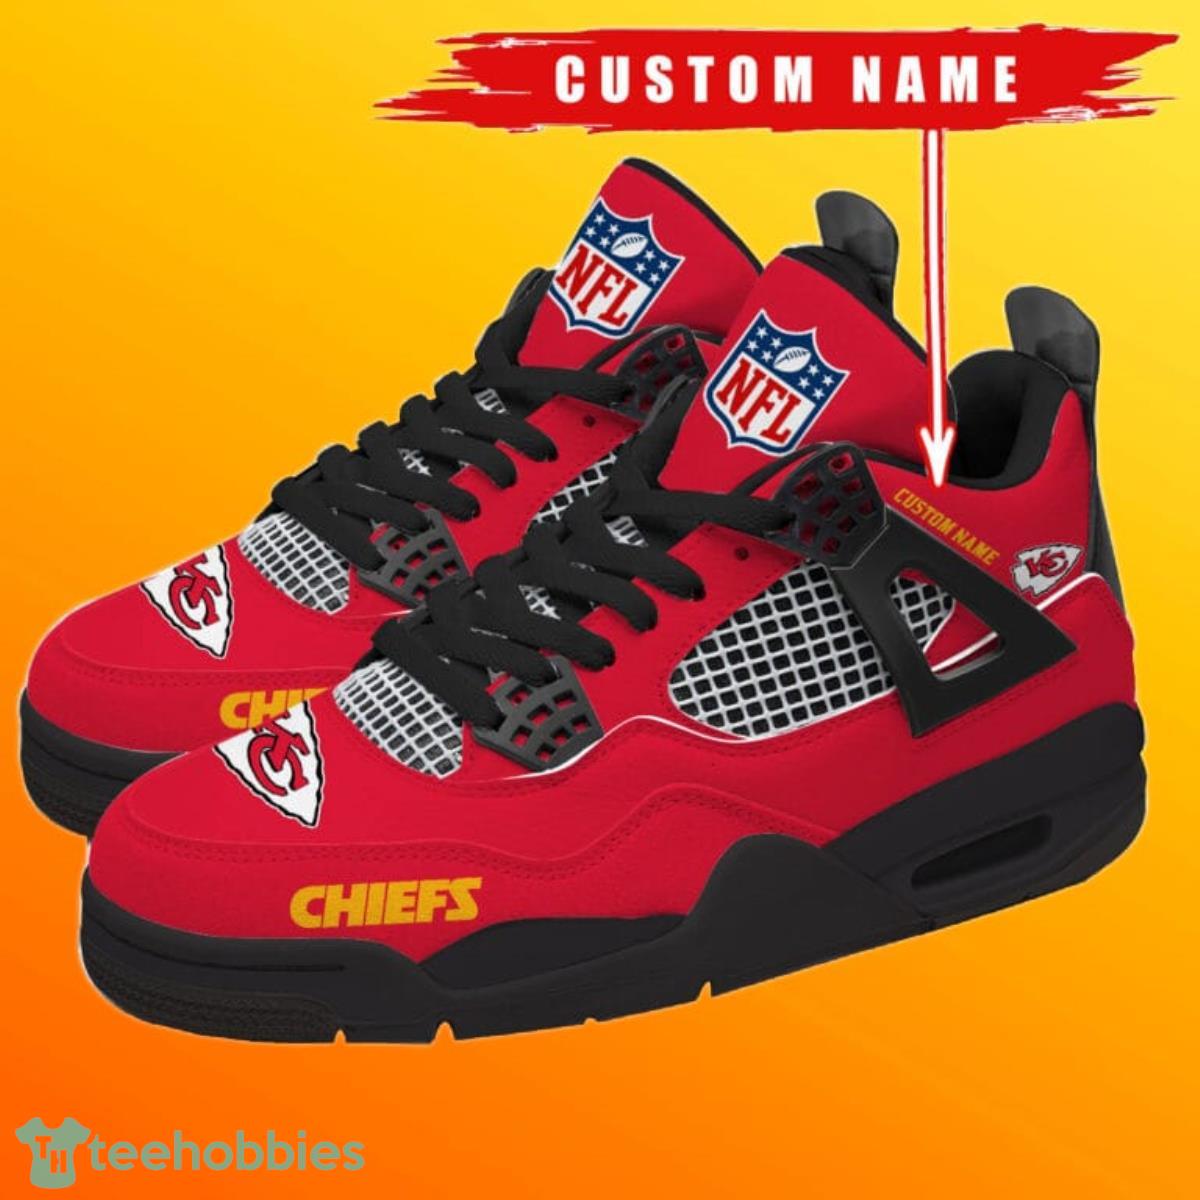 NFL Kansas City Chiefs Air Jordan Hightop Shoes Custom Name - Freedomdesign